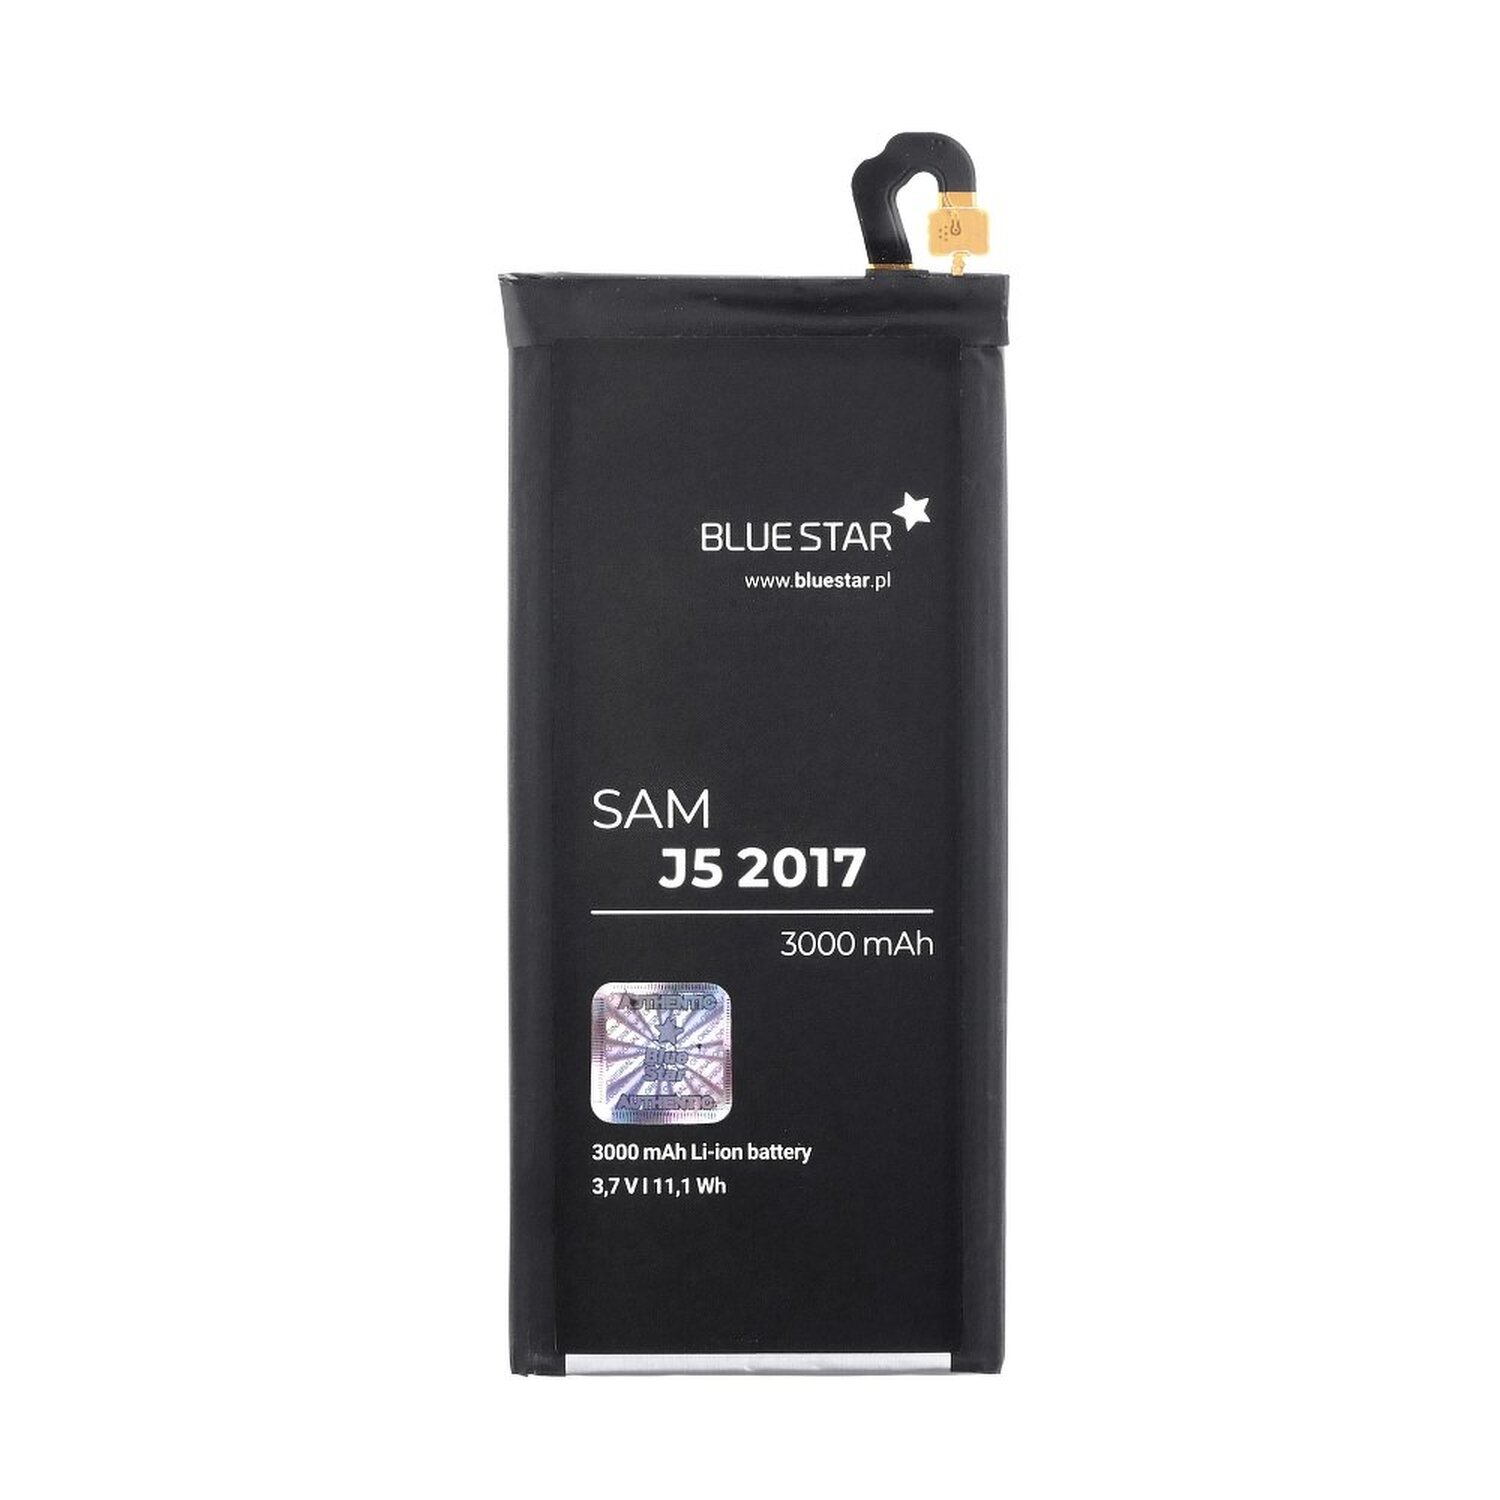 BLUESTAR Galaxy Li-Ion Handyakku Samsung für 2017 A5 Akku